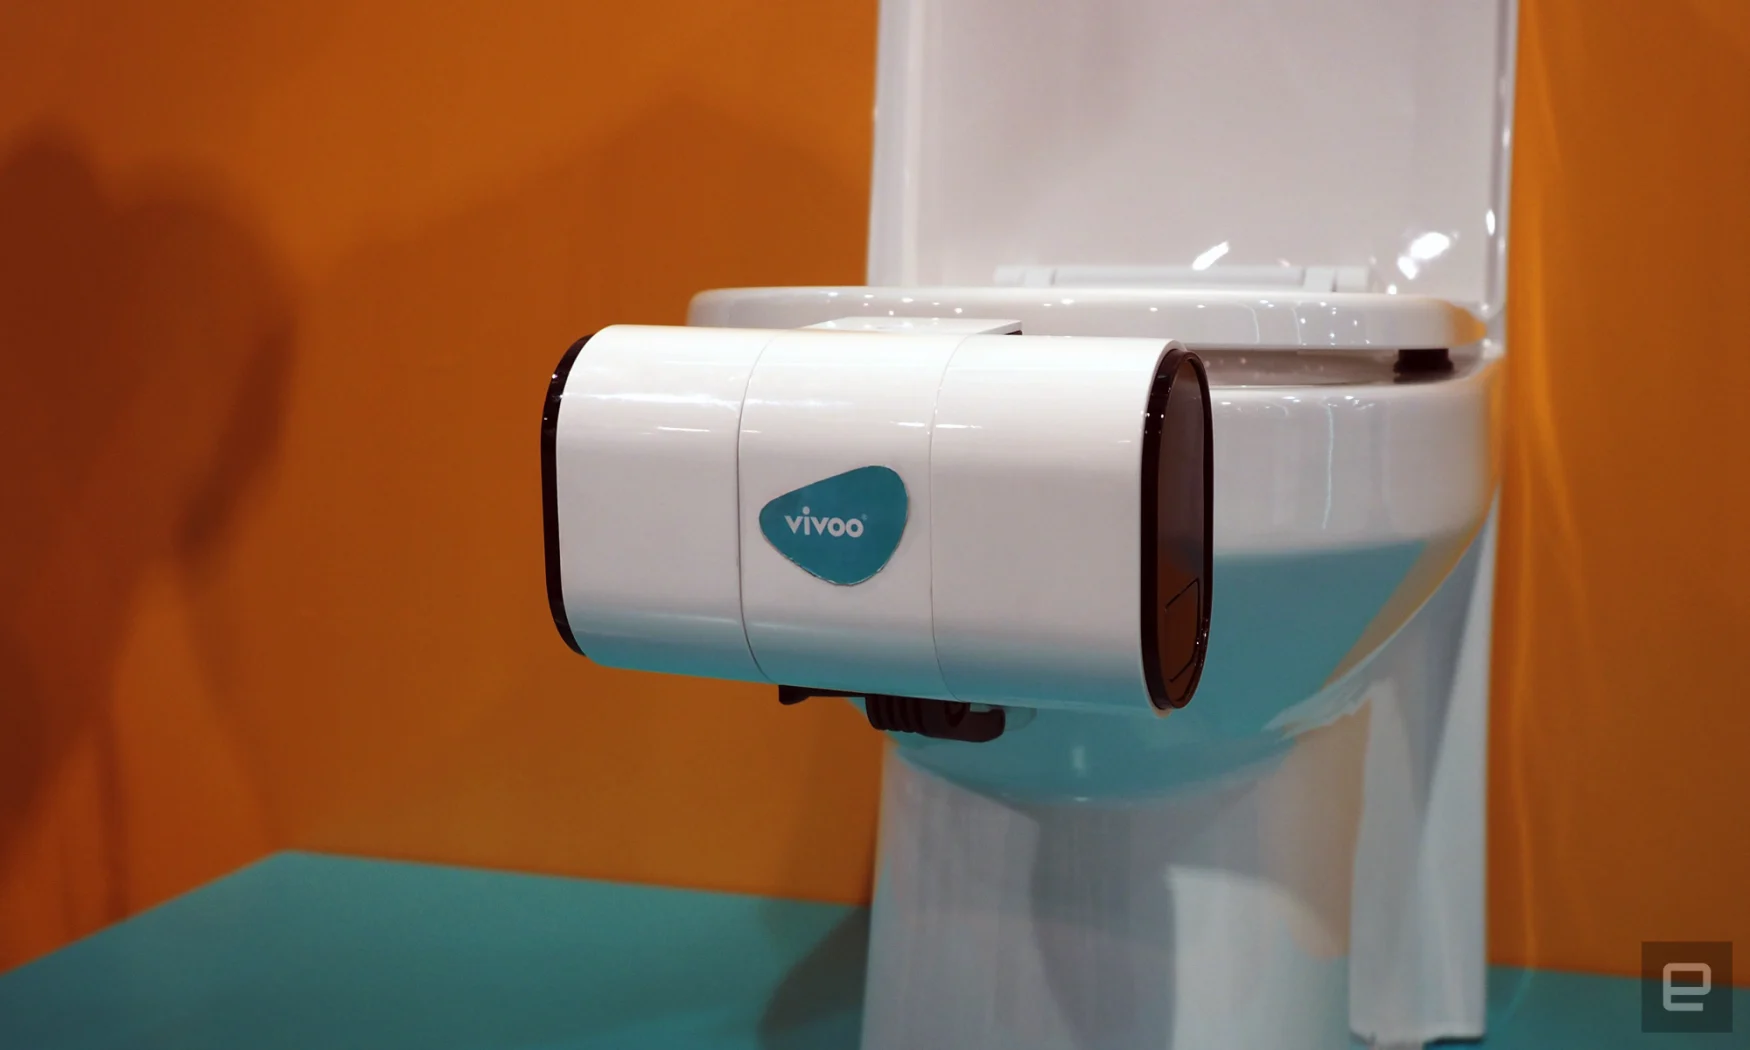 Image of Vivoo's toilet-mounted urine analysis device.